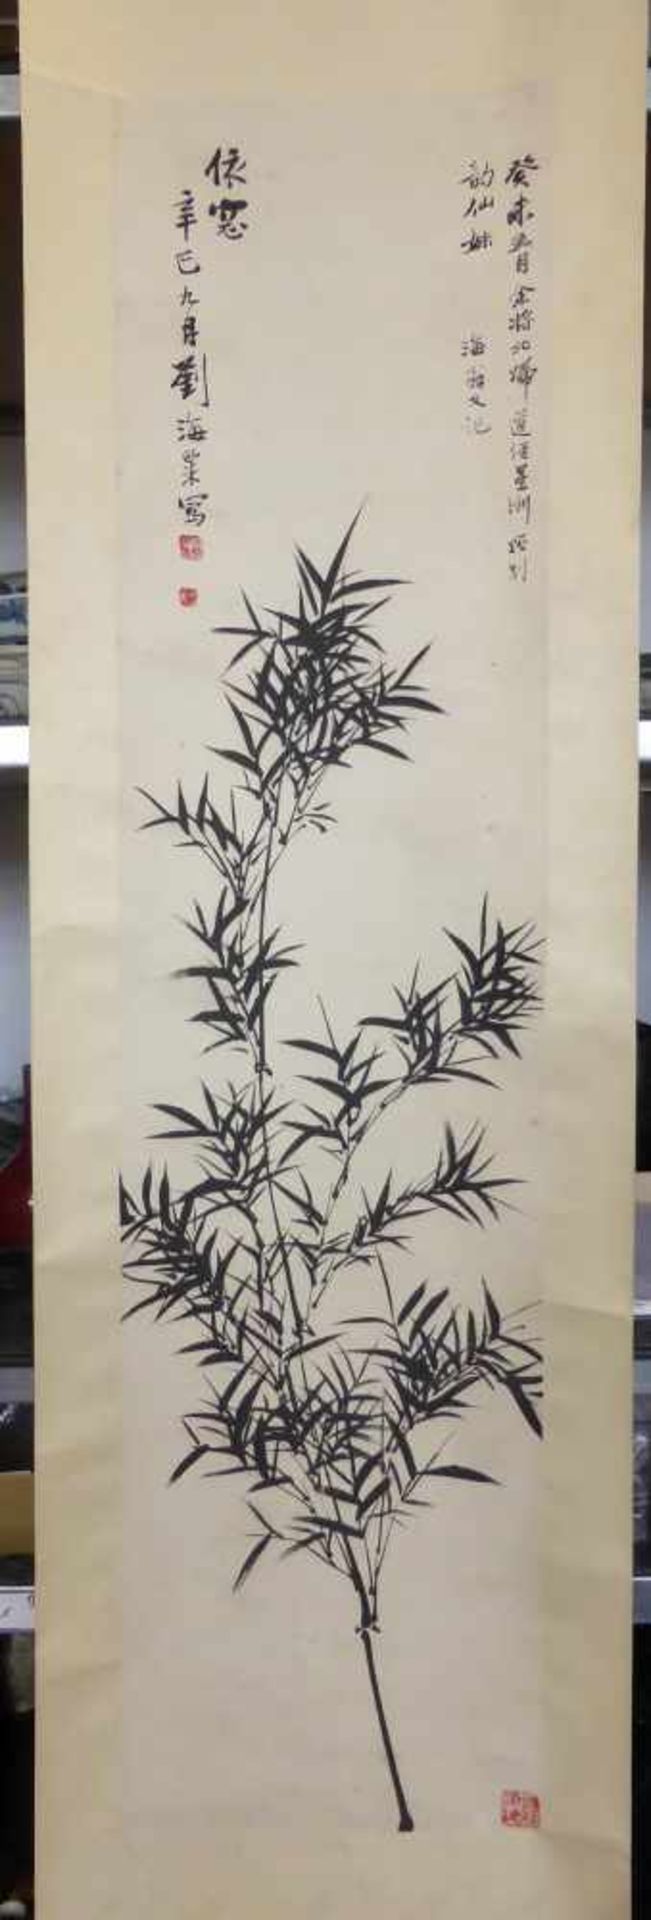 LIU, HAISU1896 Shangzhou - 1994. Bamboo. China. 1941 resp. 1943. Ink on paper. 136x33.5cm. . - Image 2 of 3